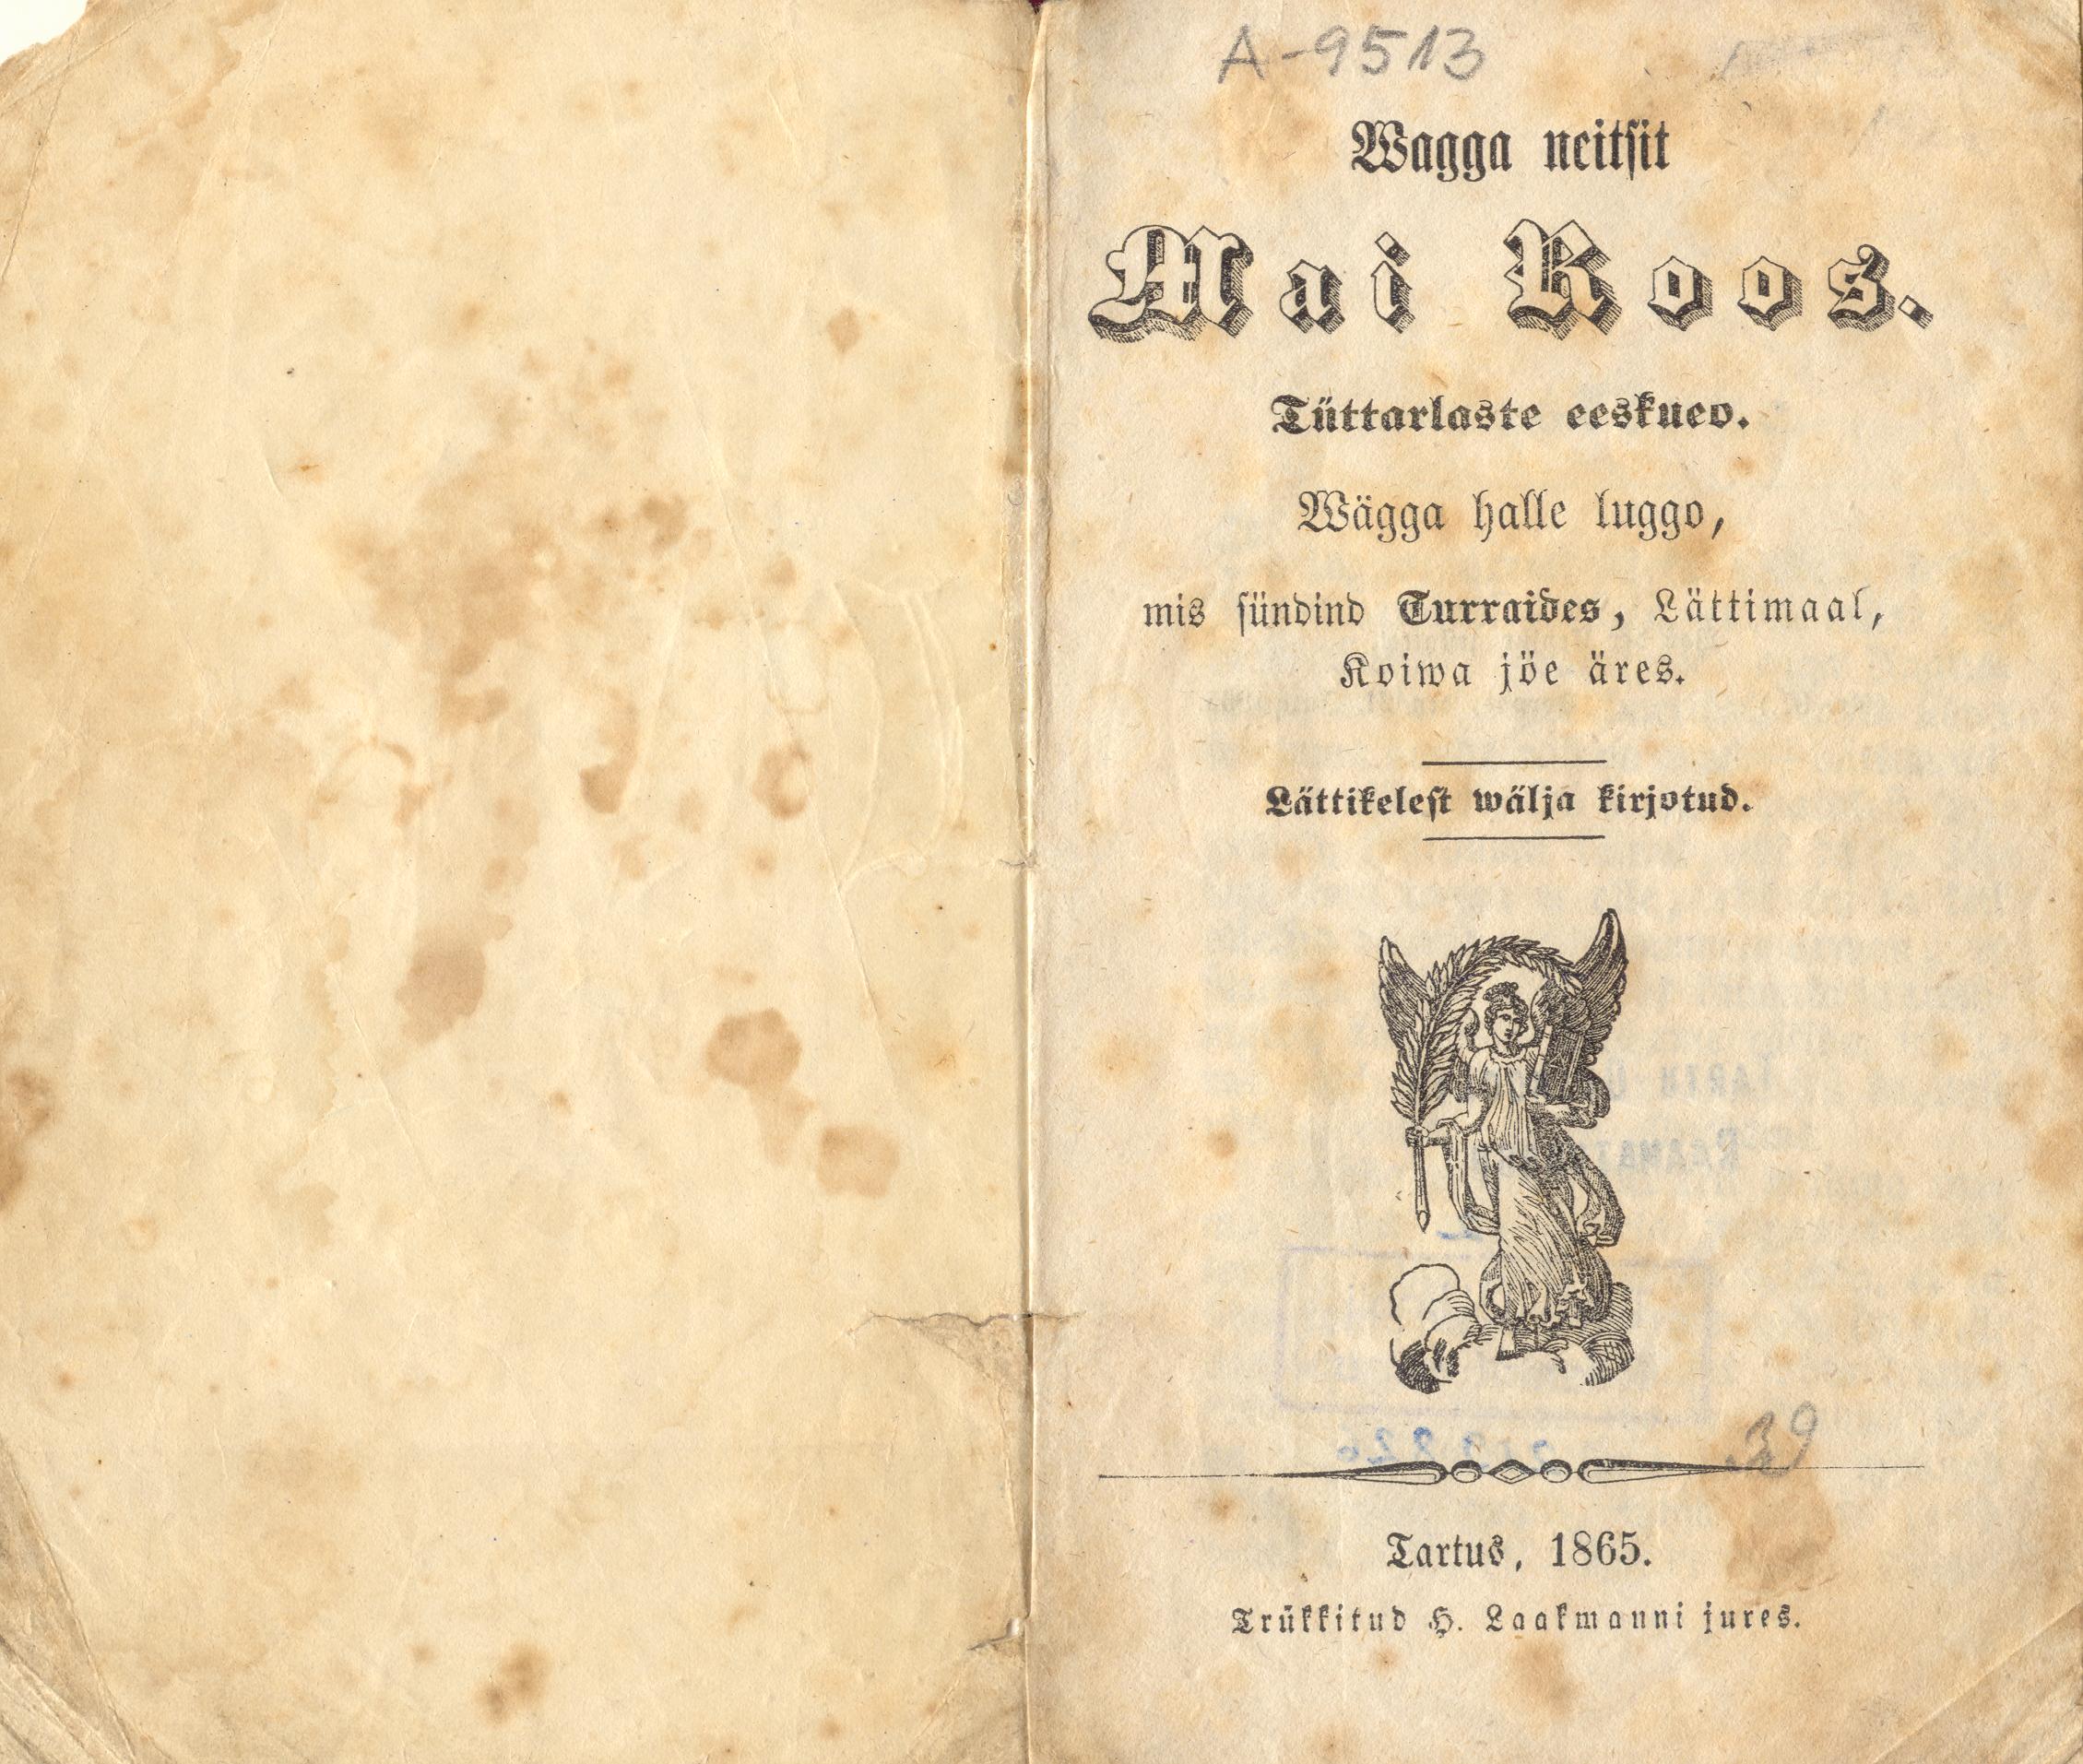 Wagga neitsit Mai Roos (1865) | 1. Title page